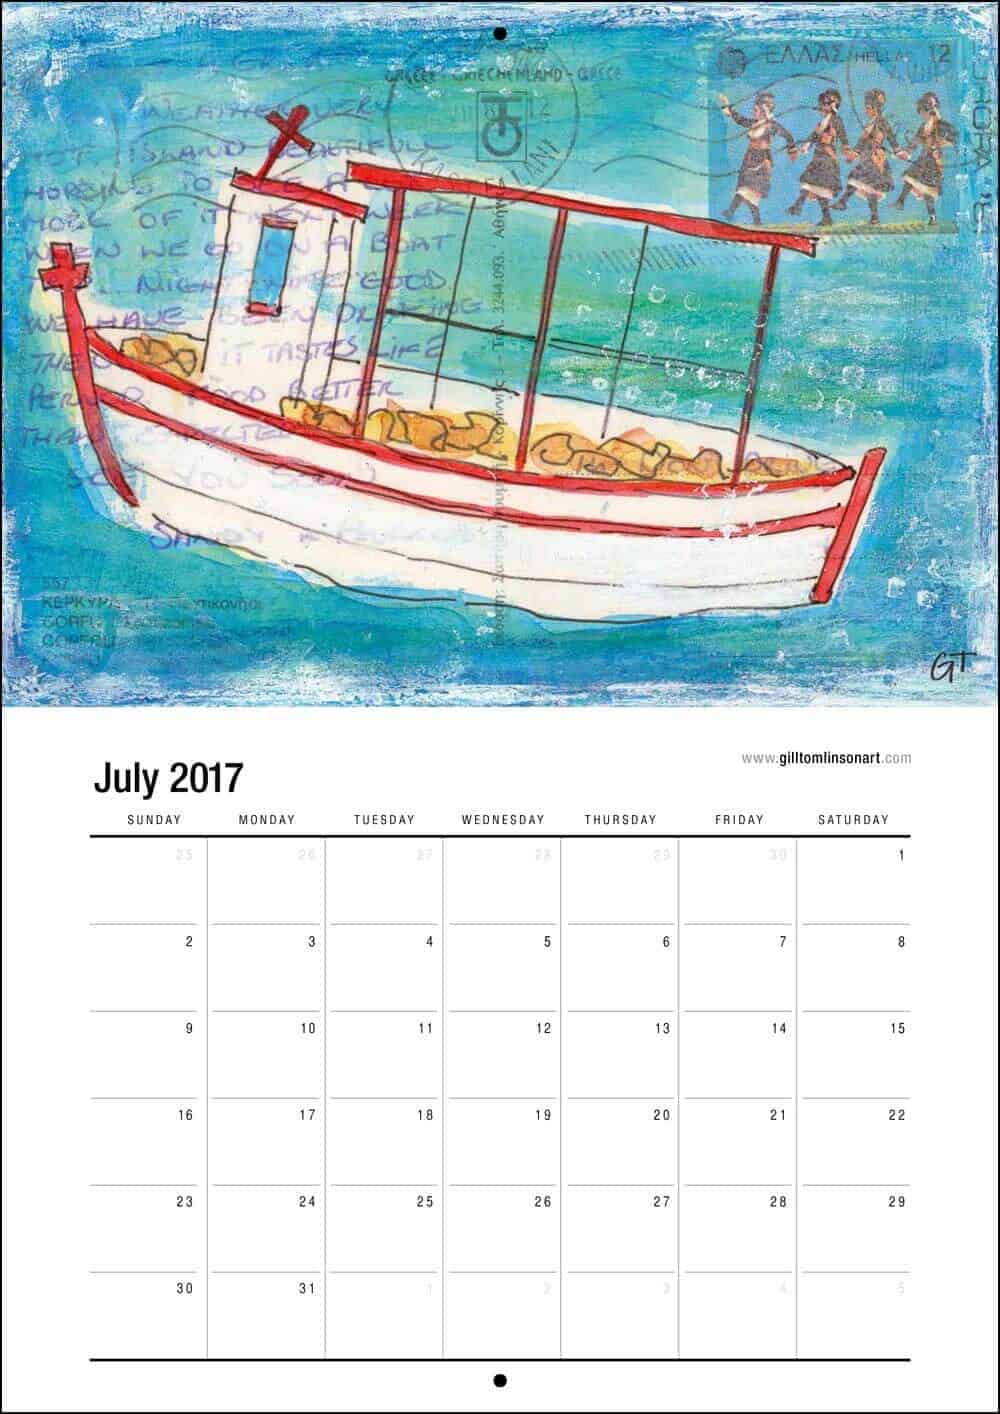 Greece art calendar fishing boat painting July